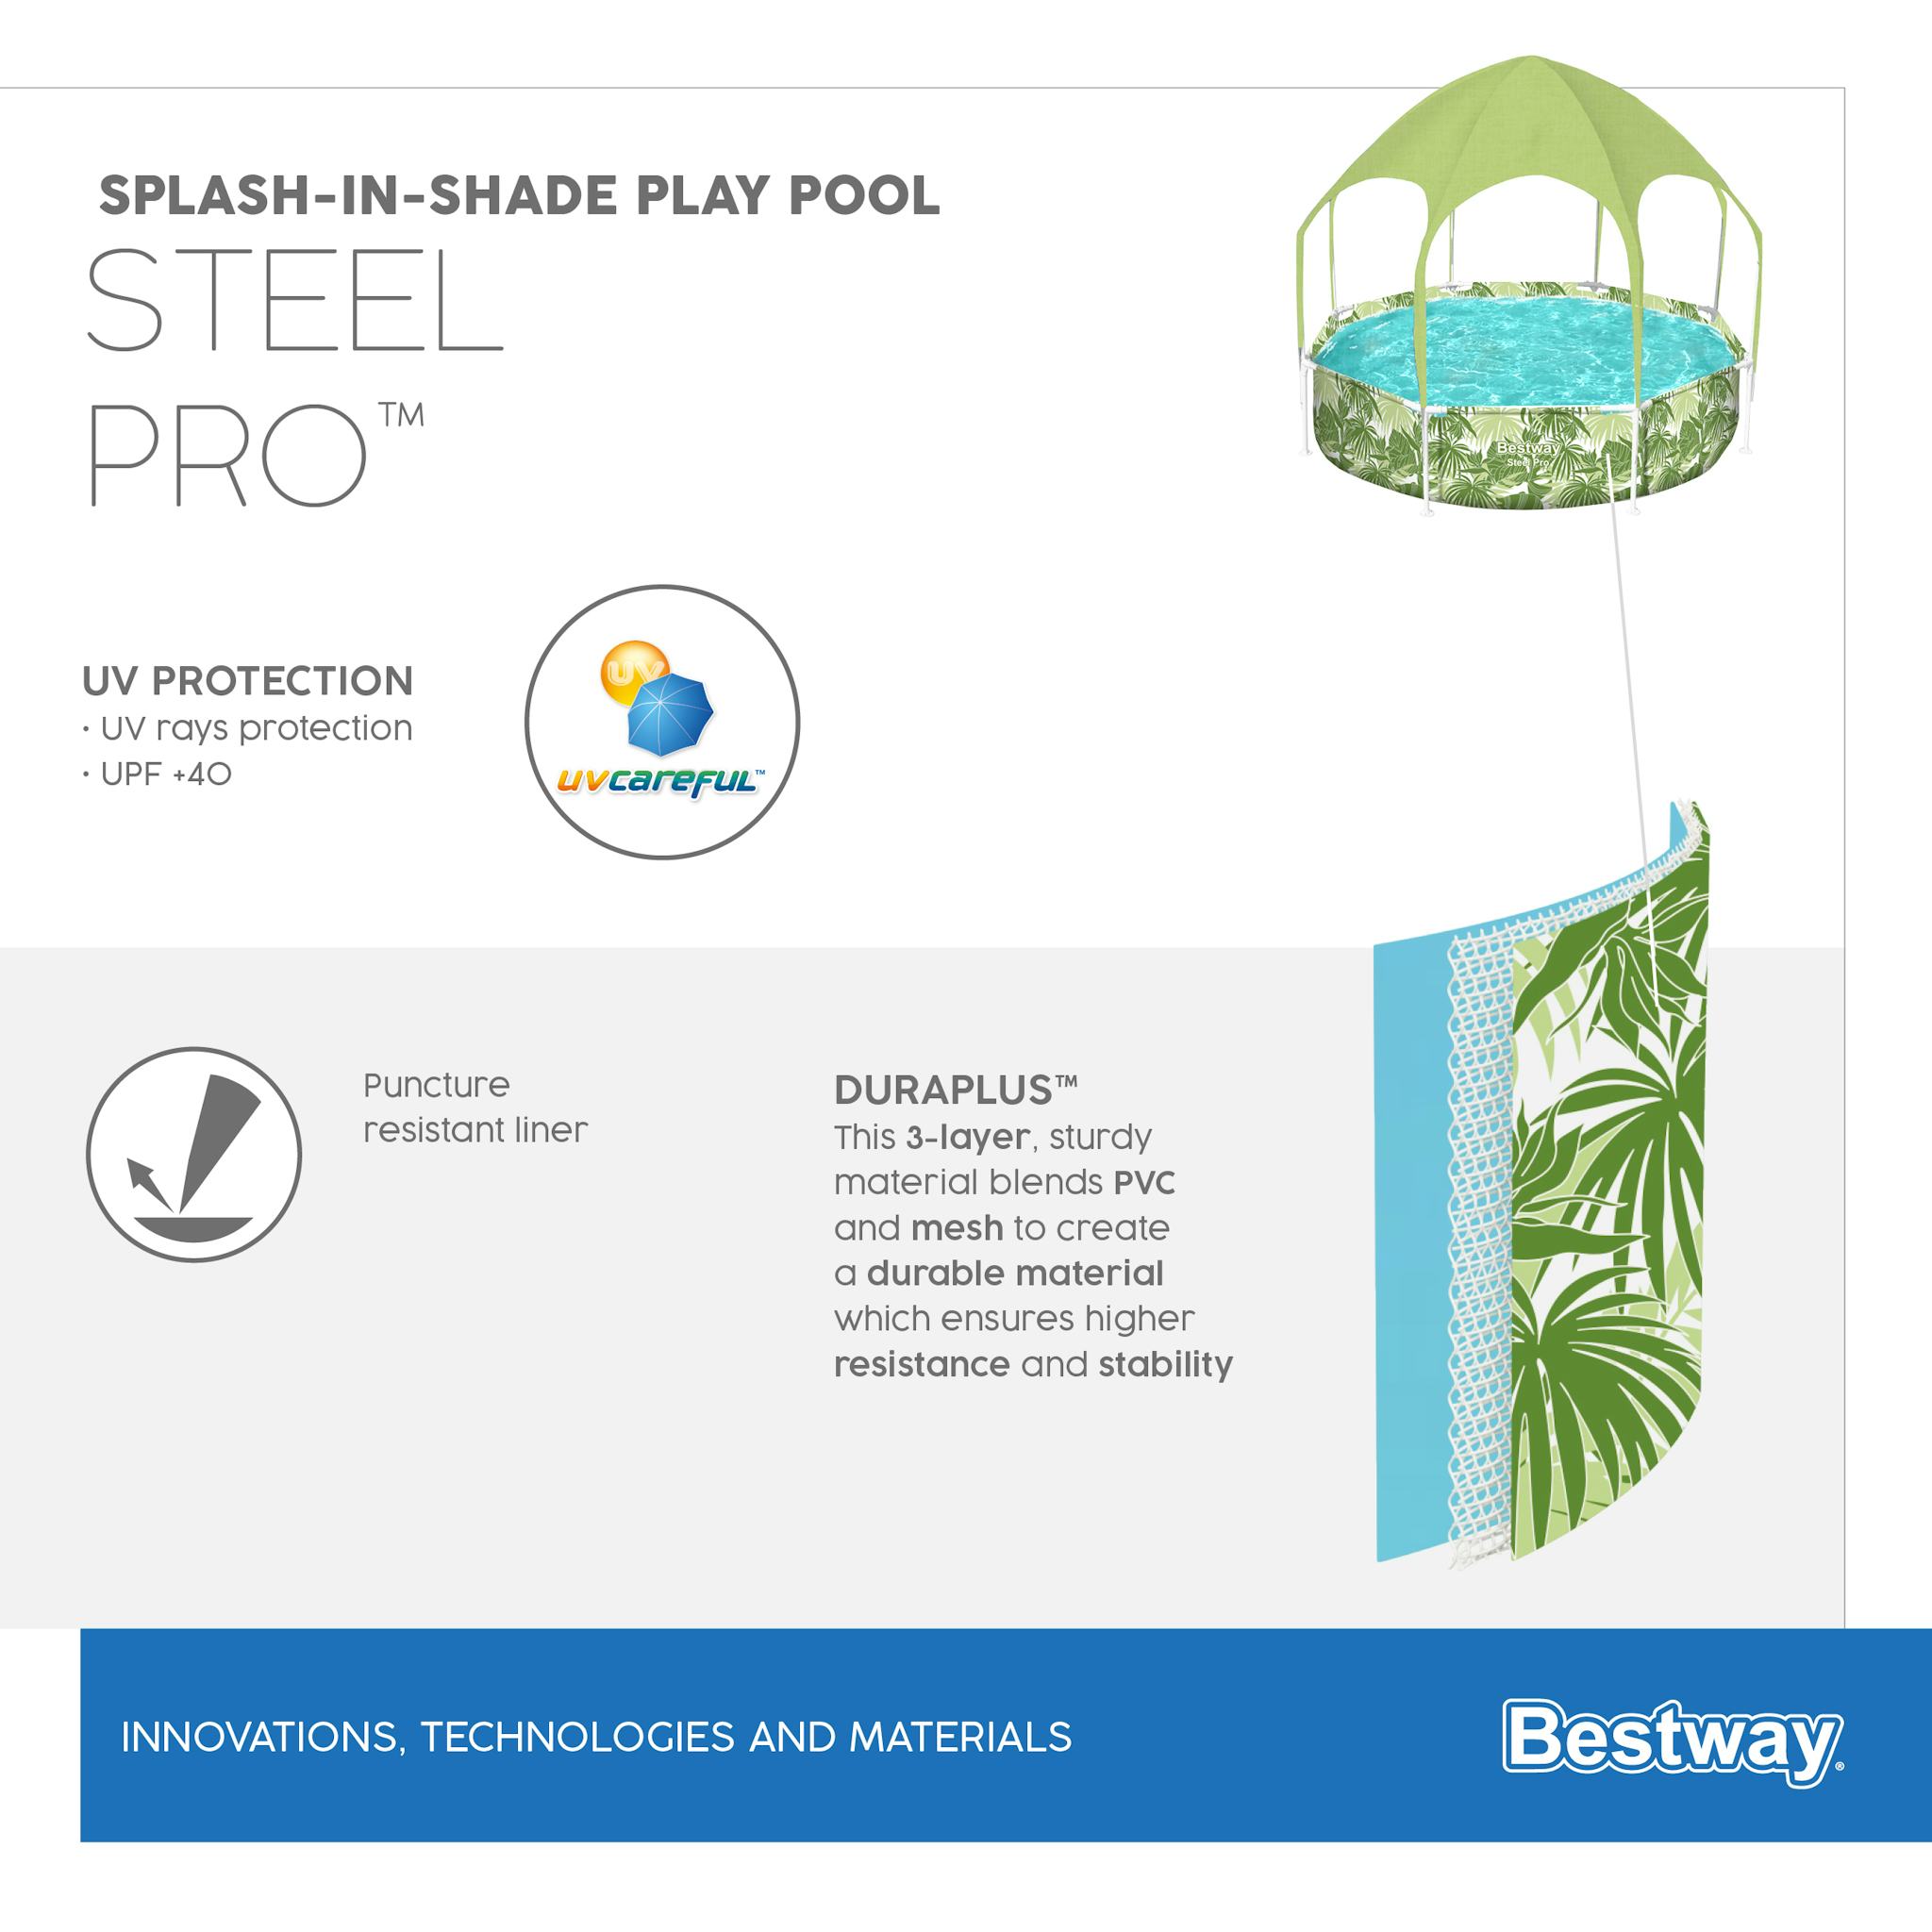 Giochi gonfiabili per bambini Piscina rotonda con parasole UV Careful Splash-in-Shade verde Bestway 6